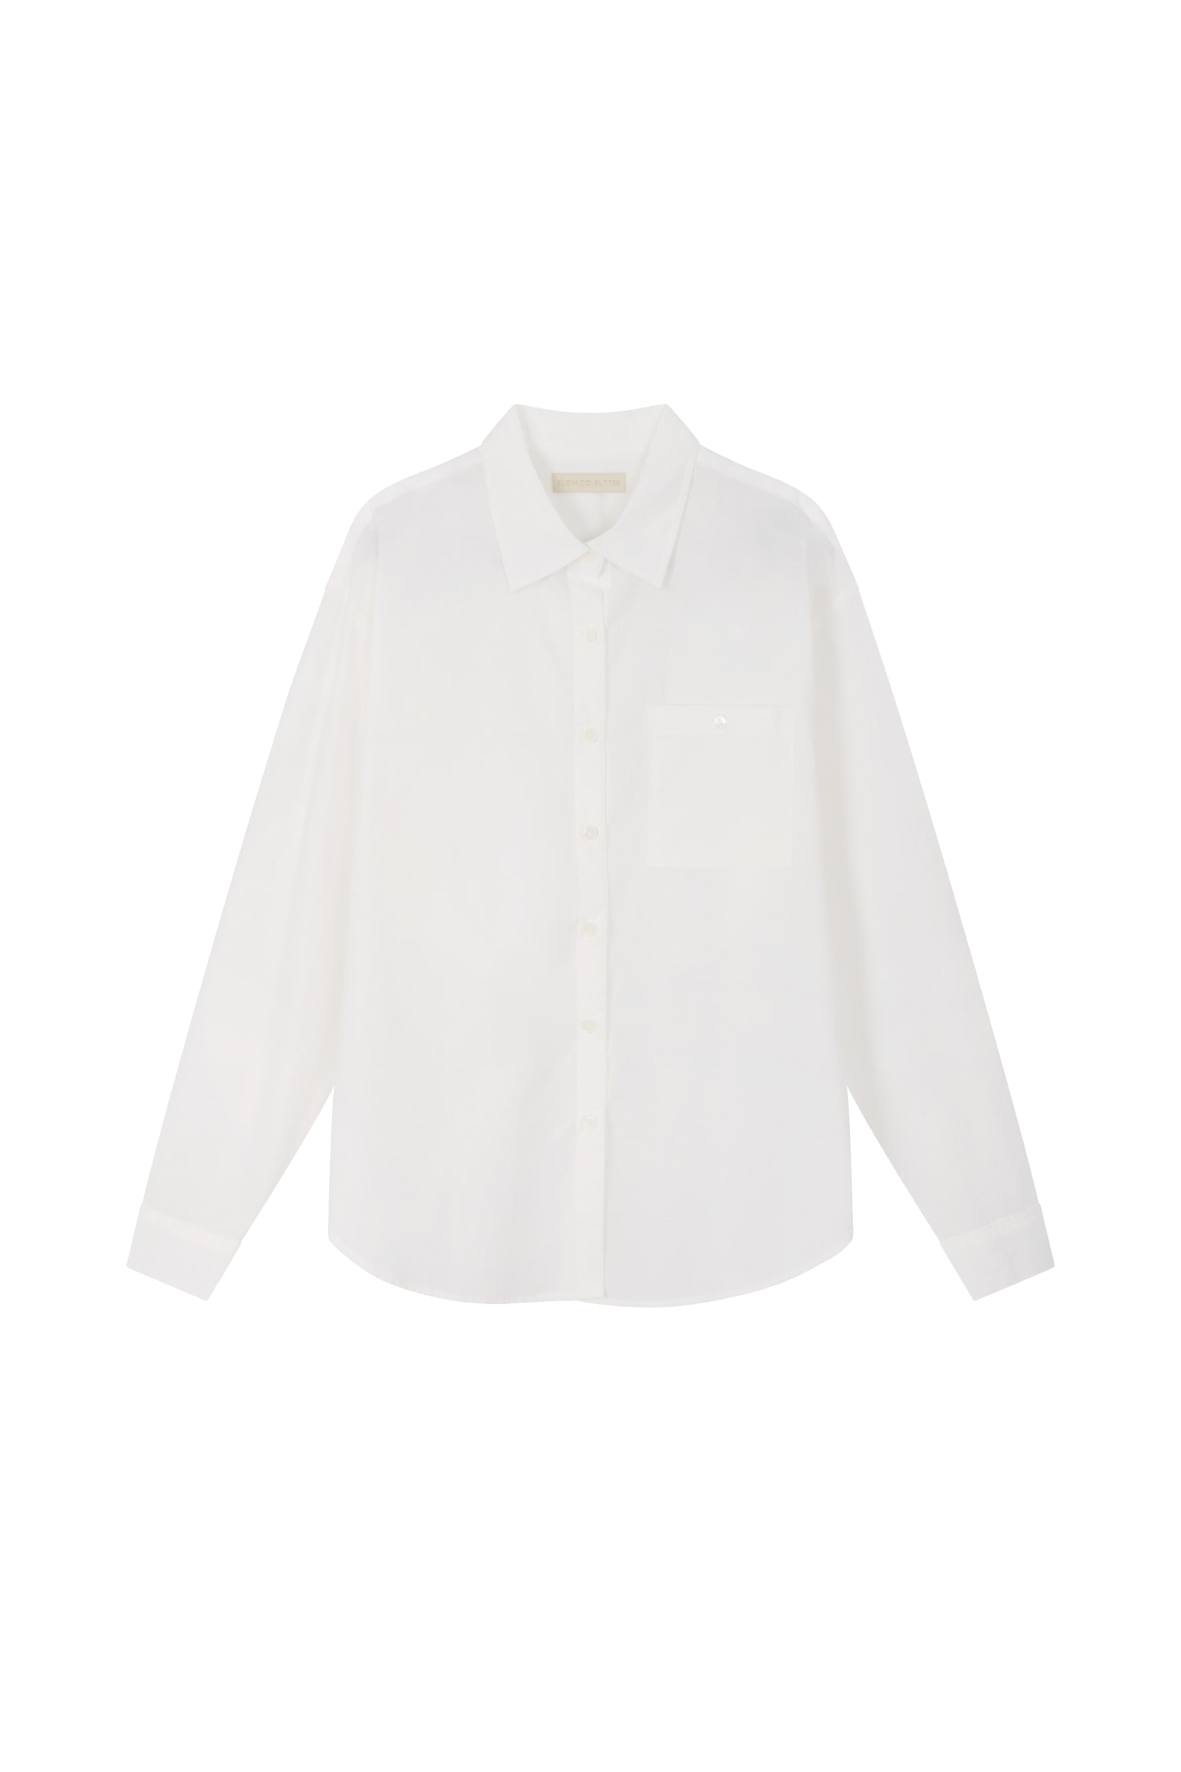 [SLOCO] Classic natural cotton shirt, white